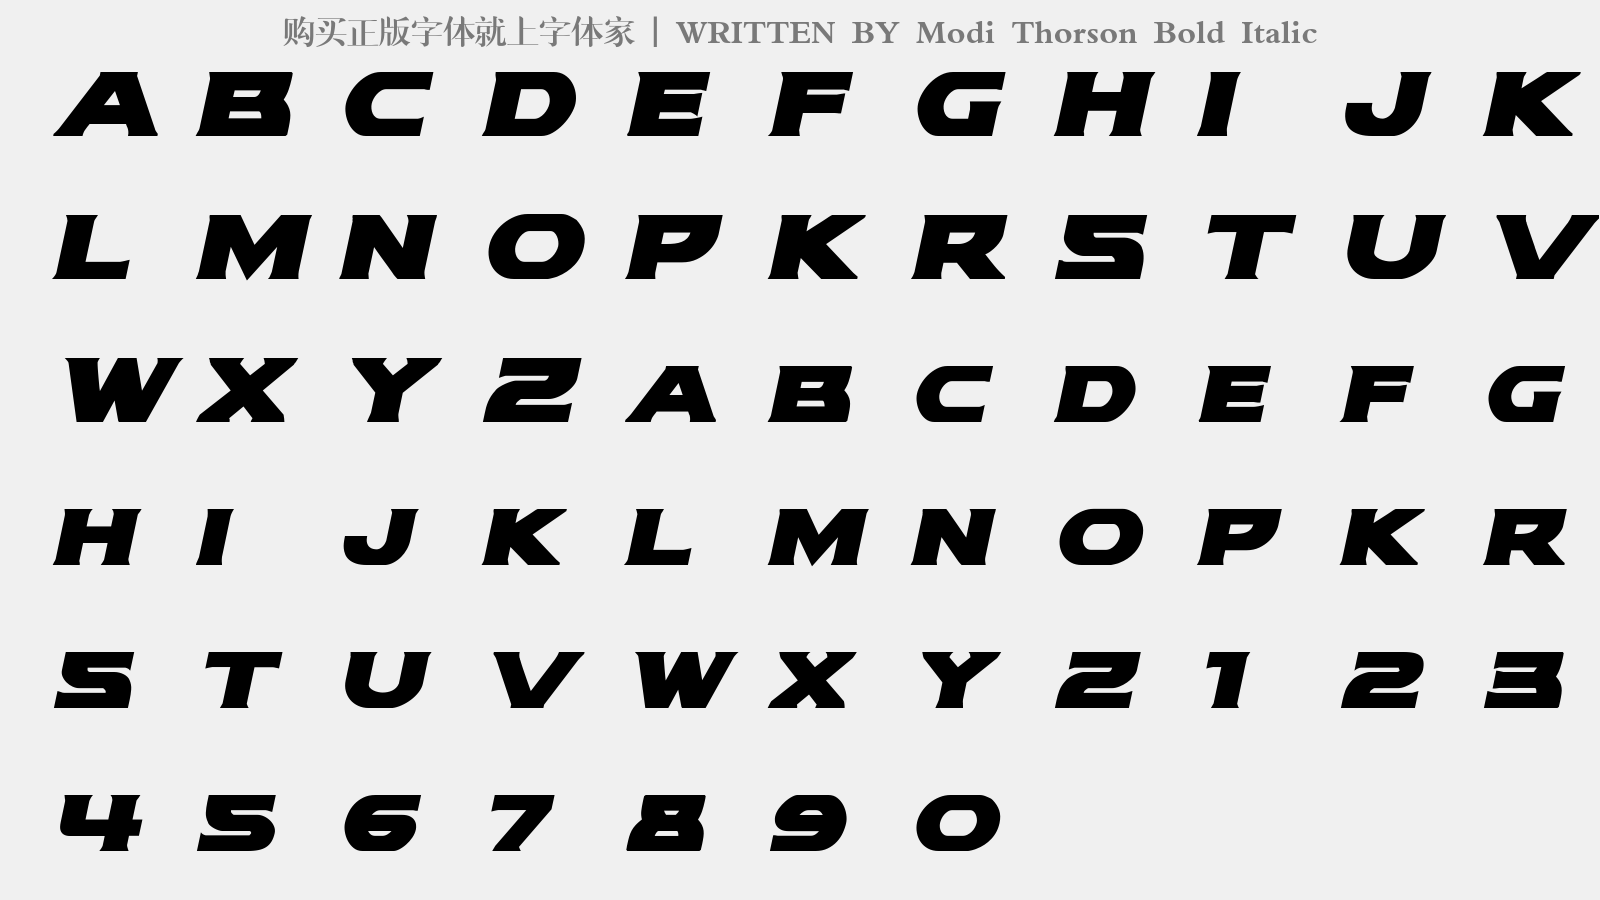 Modi Thorson Bold Italic - 大写字母/小写字母/数字